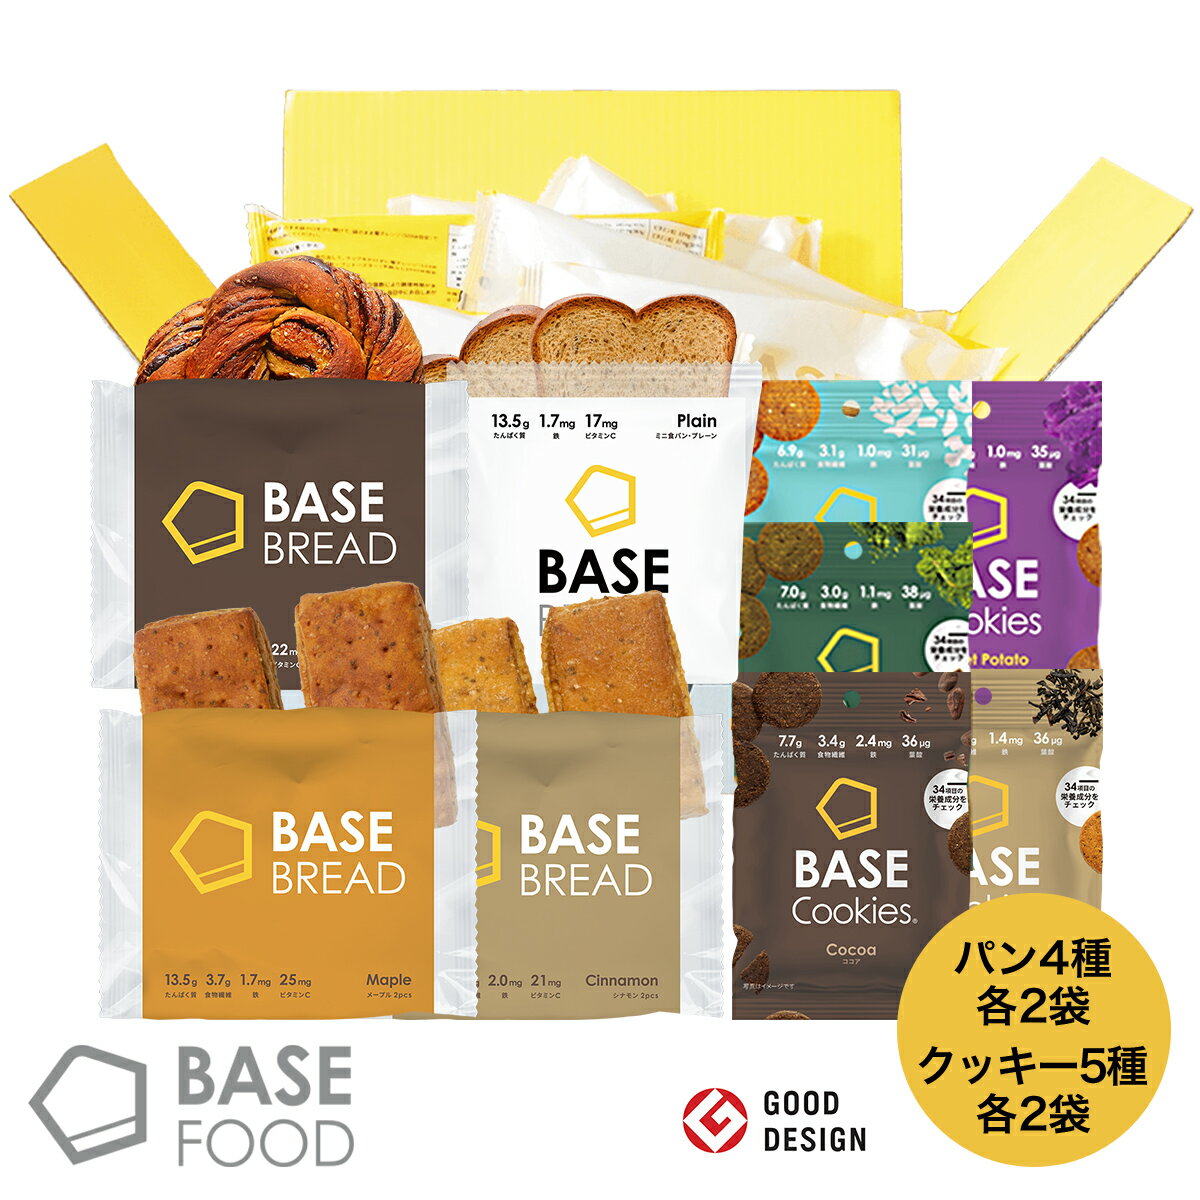 BASE BREAD& BASE Cookiesセット ミニ食パン チョコレート メープル シナモン 各2袋 クッキー ココア ..